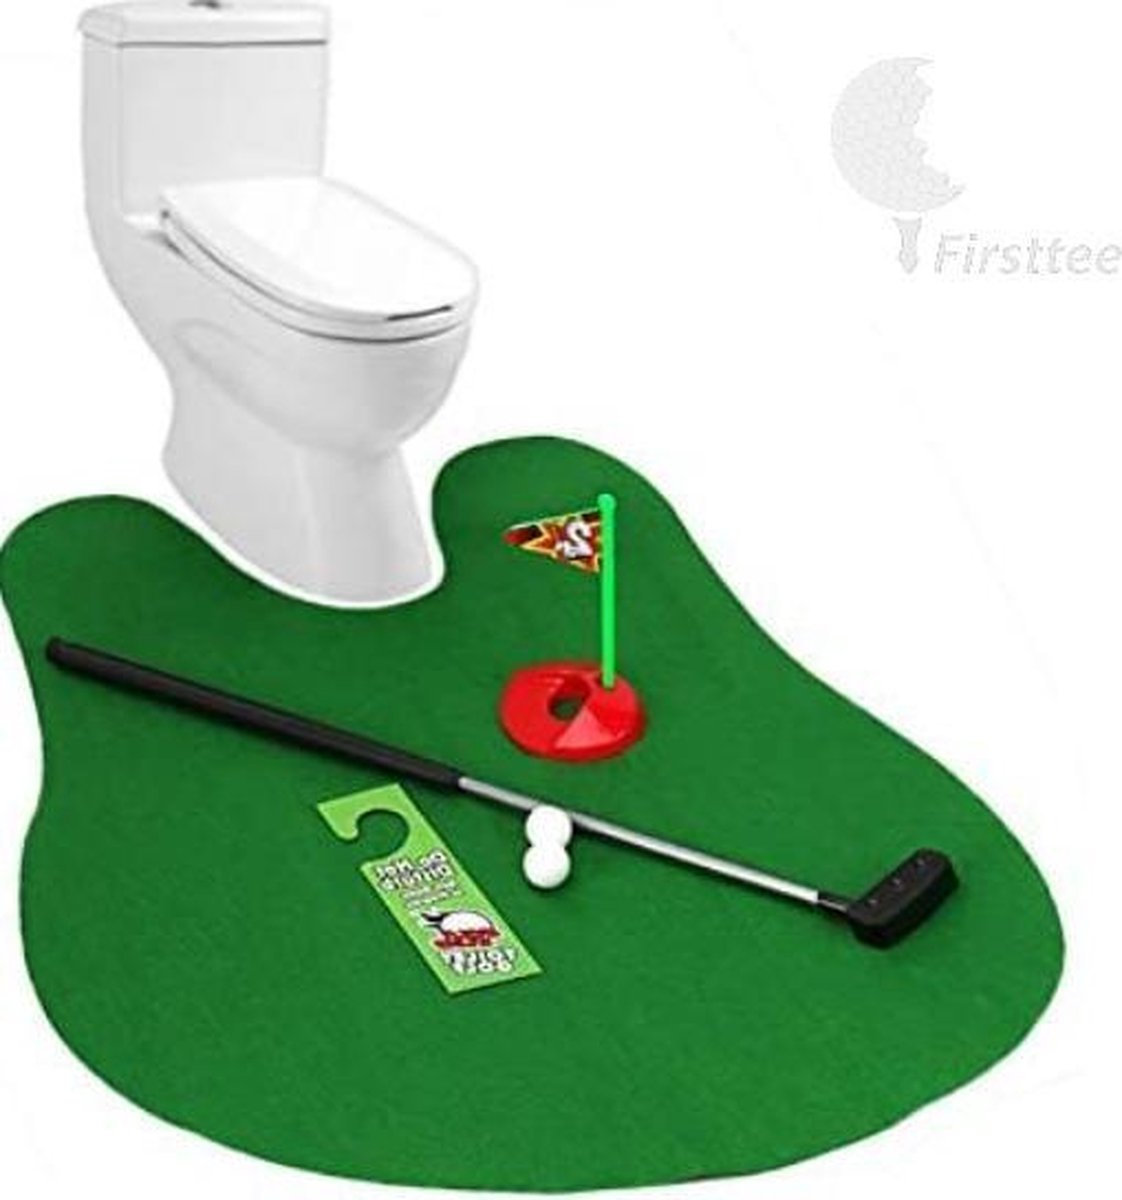 Firsttee - Toilet putter - Kadoset - Golf - Golfset - Mini golfset - Toilet Golf - Putter - Speelset - Cadeau - Fungolf - Sport Speelgoed - Oefenset - Putting